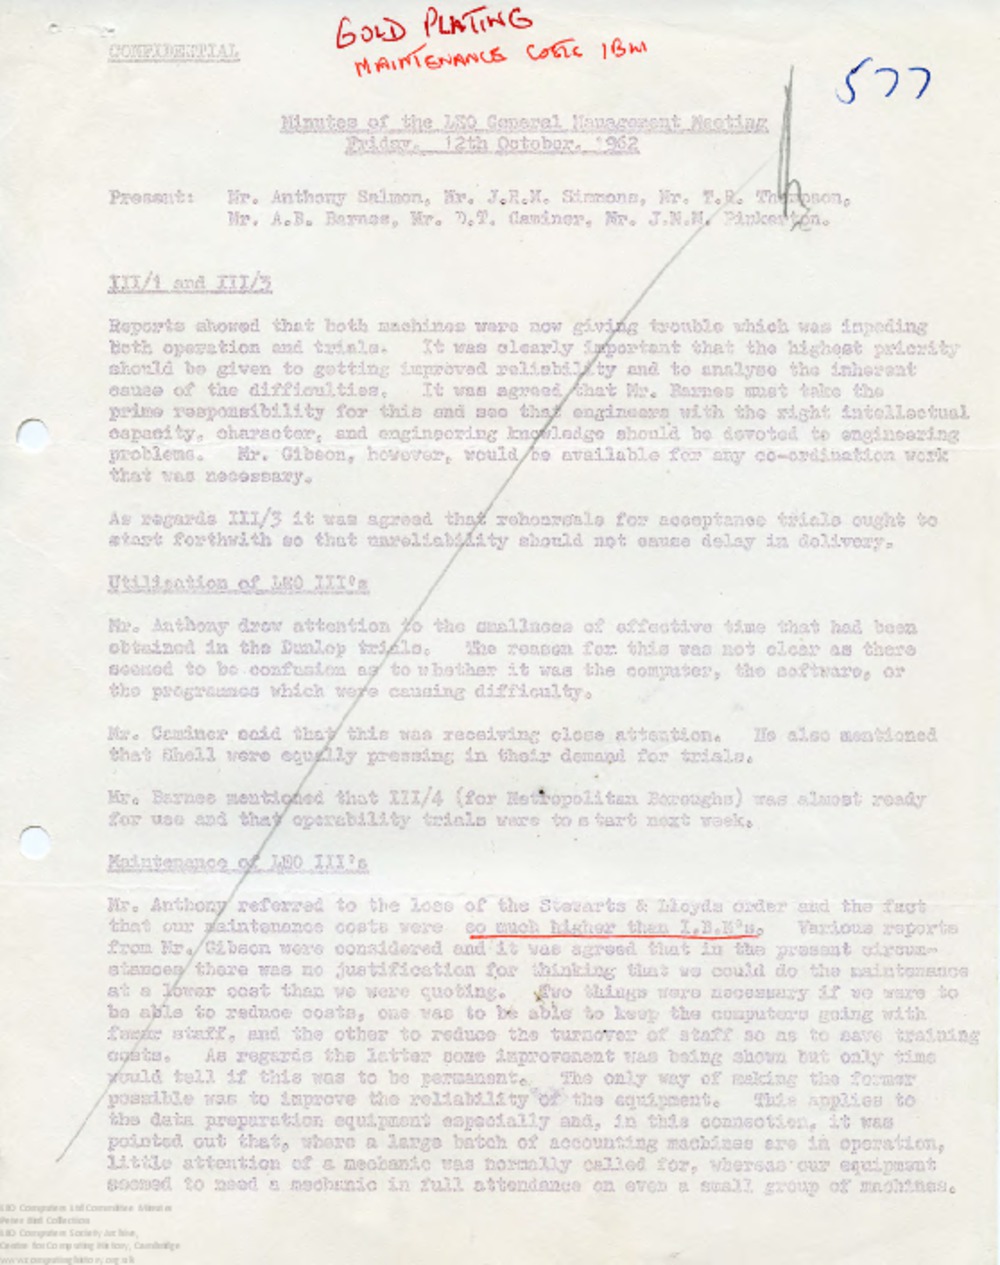 Article: 64723 LEO Management Meeting, 1962 fourth quarter (Oct-Dec 1962)